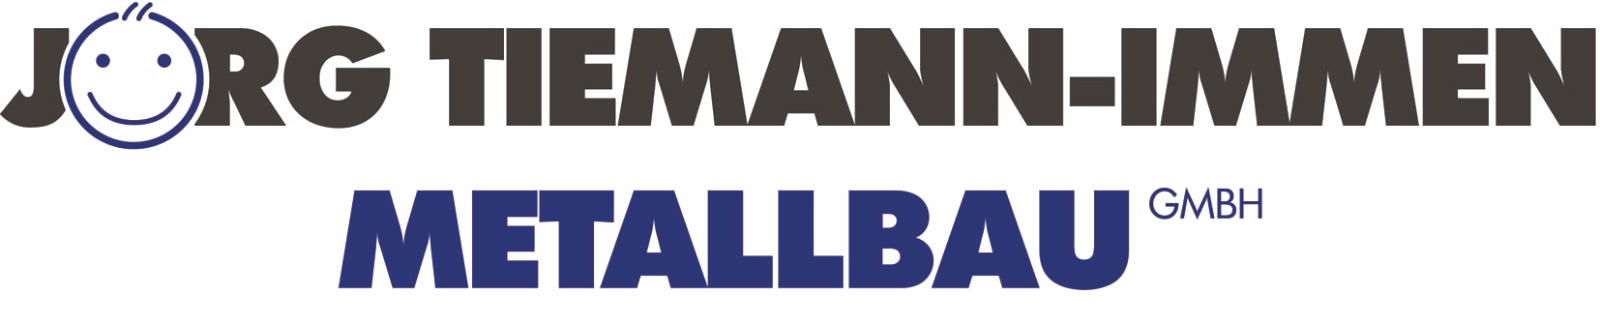 Jörg Tiemann-Immen Metallbau Logo